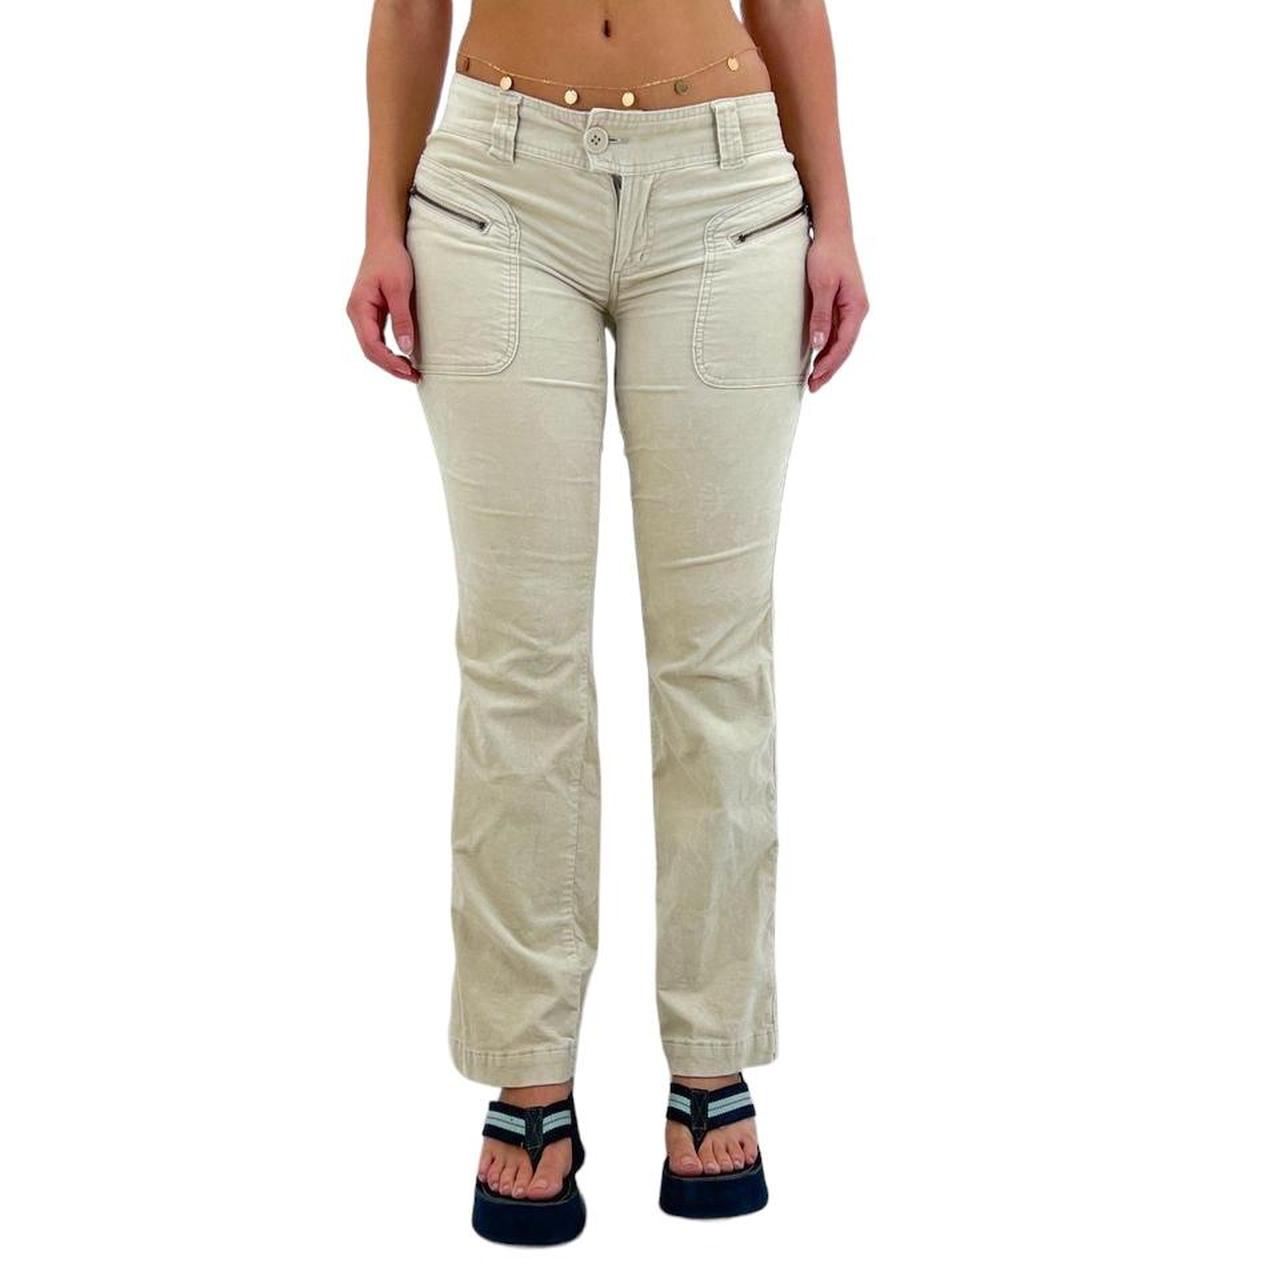 Y2k Vintage Beige Corduroy Low-Rise Stretchy Pants w/ Zippers [M]